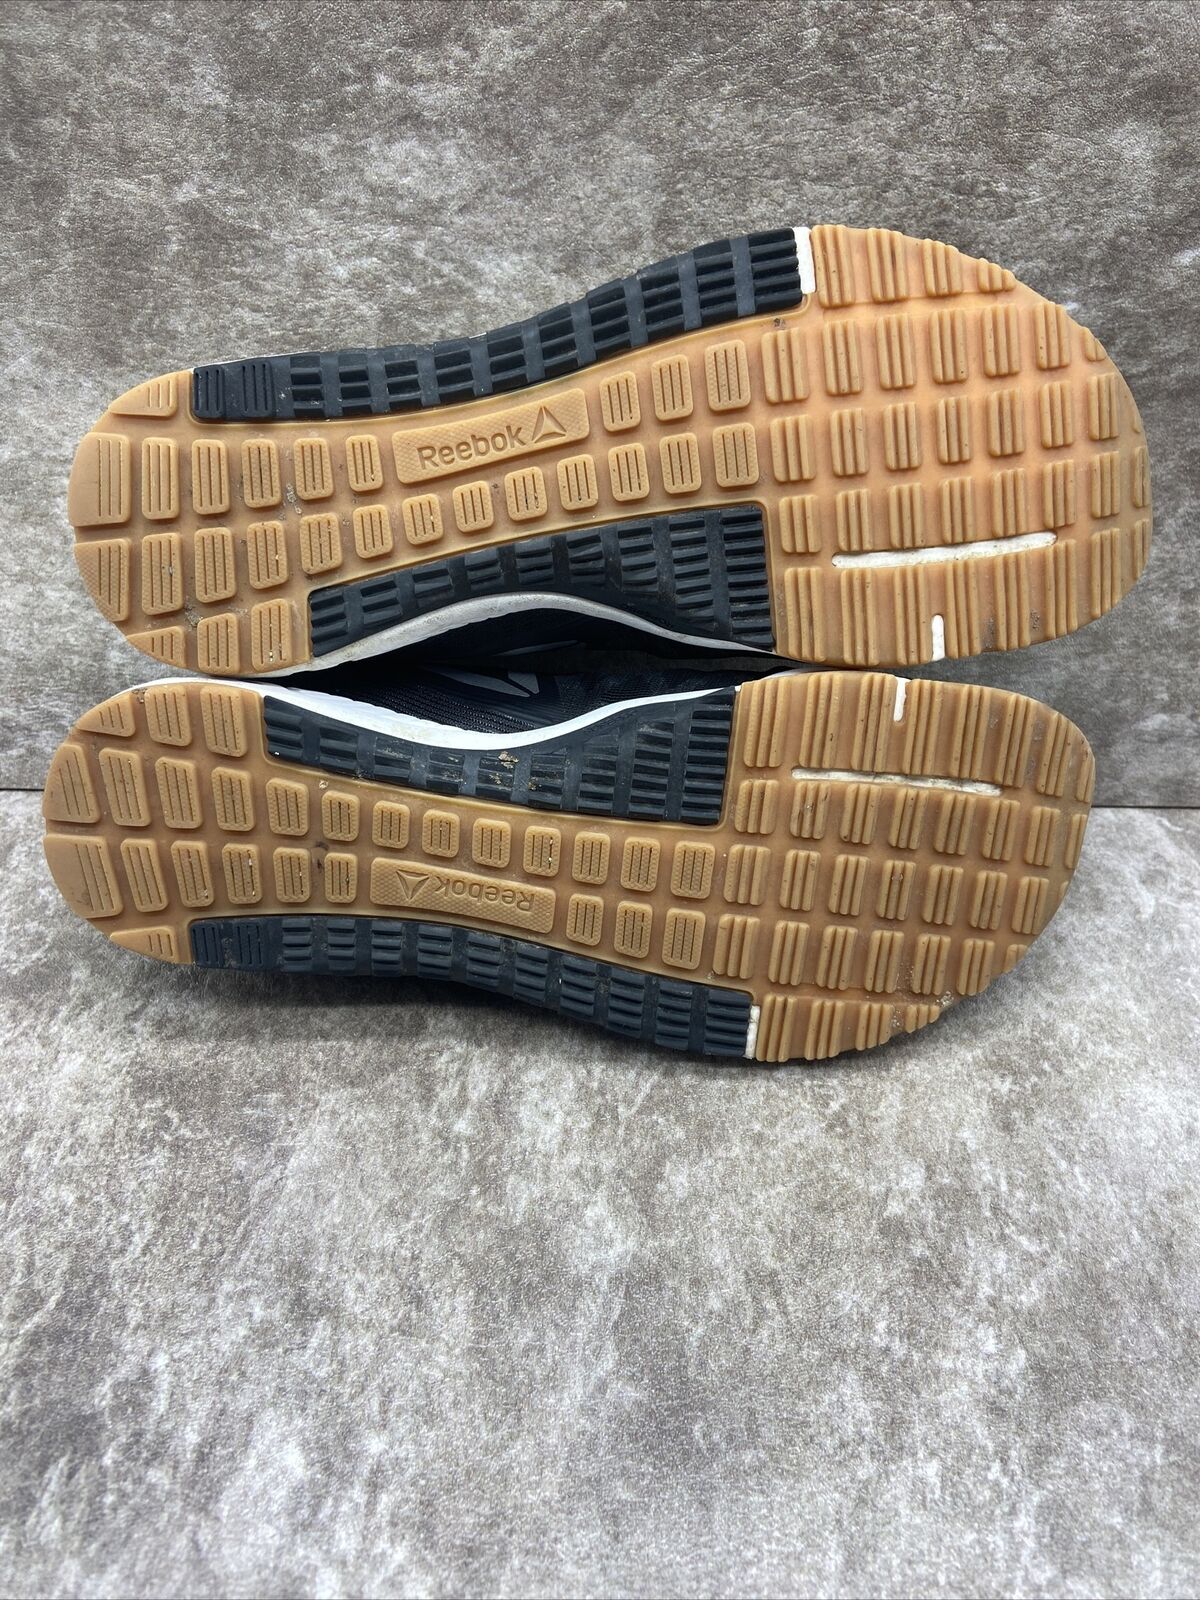 ROS TR Cross-Trainer Shoe Black Size 9 | eBay